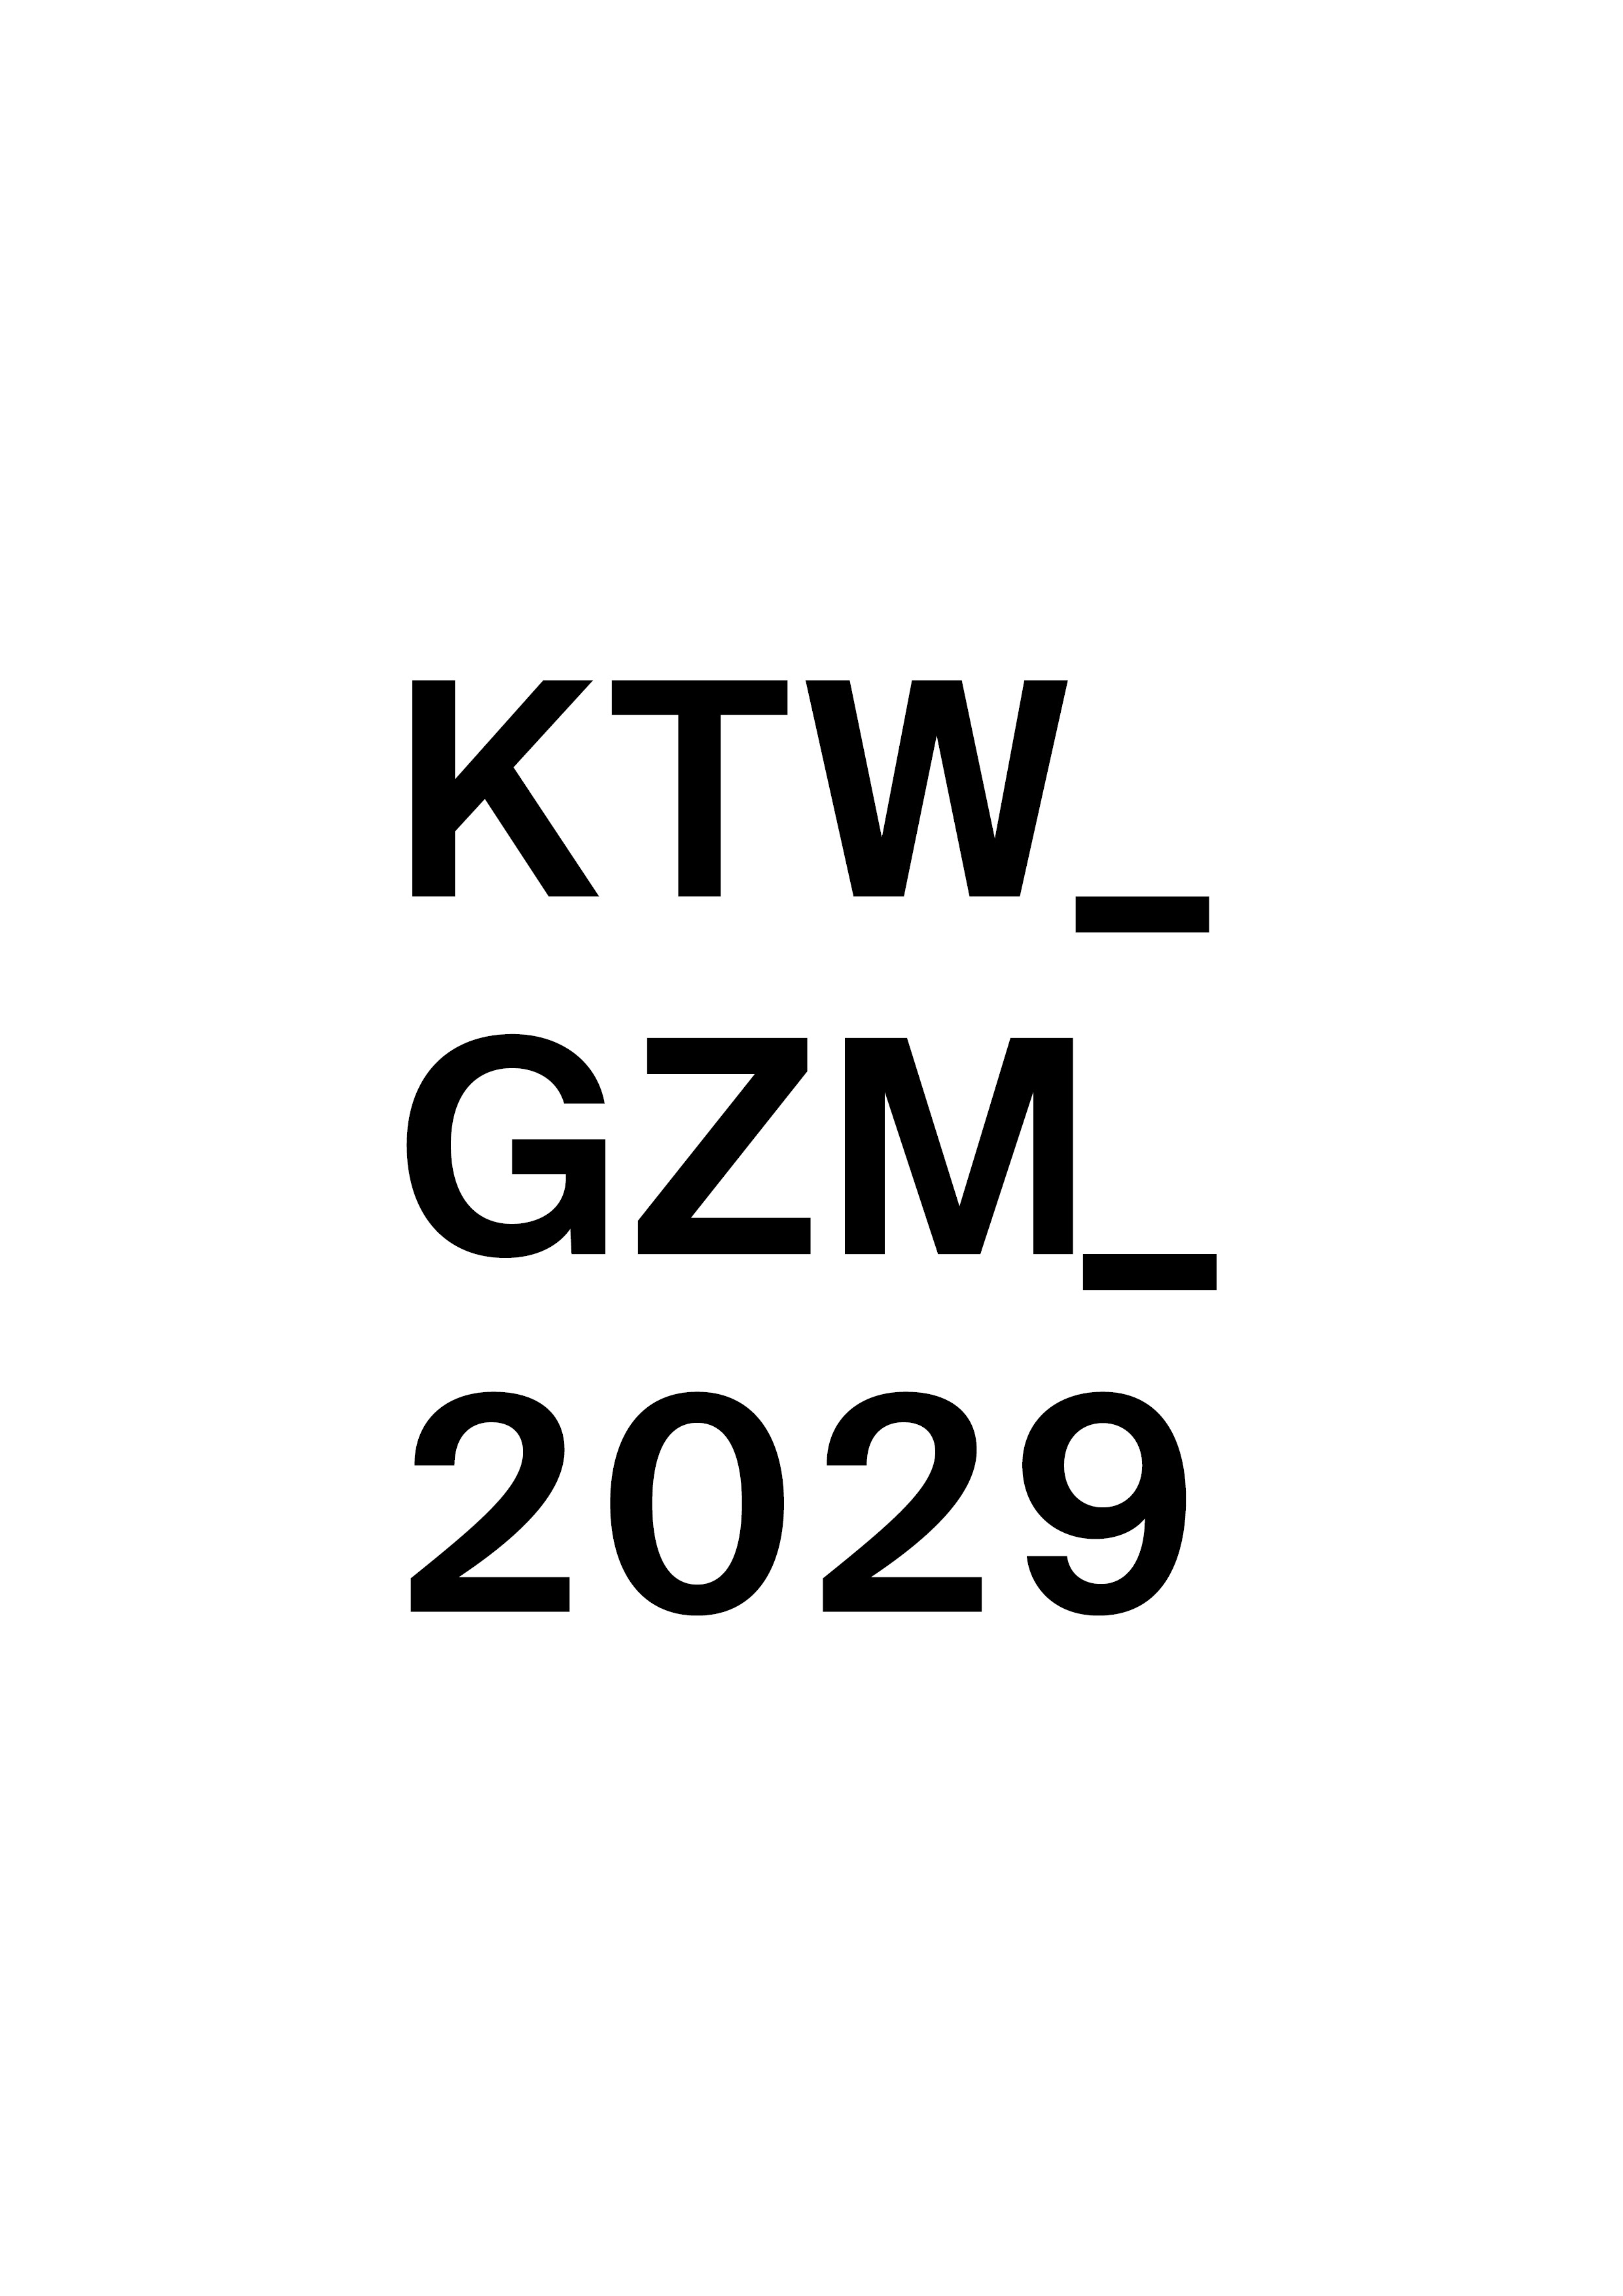 ktw_gzm_2029